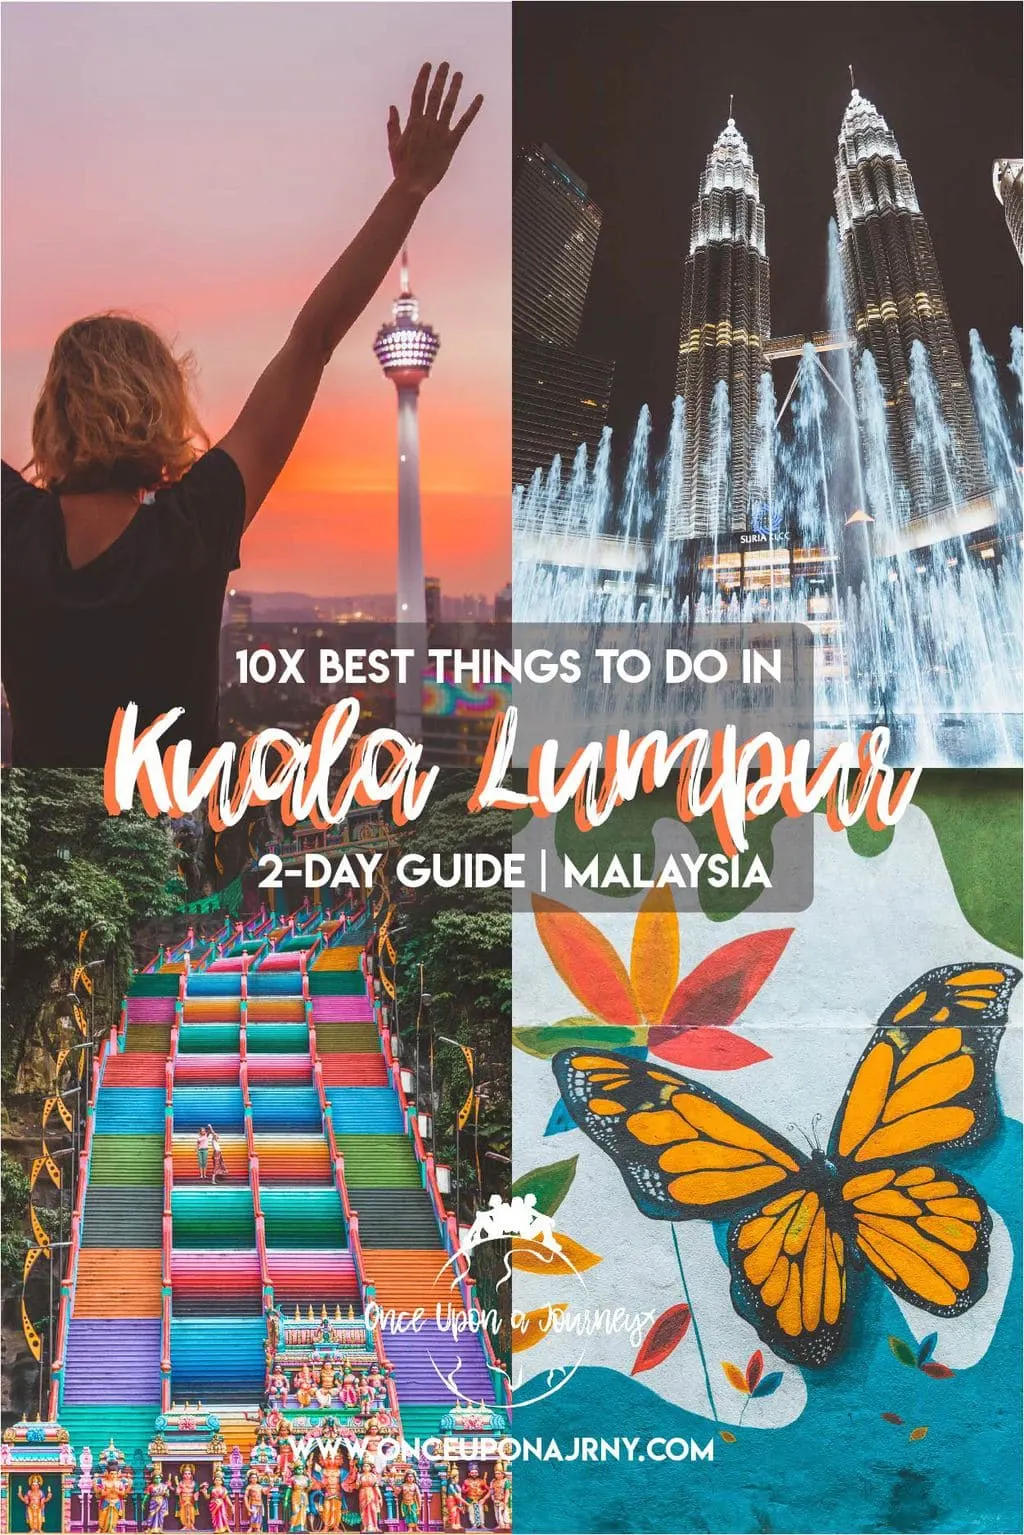 10x Best Things To Do Kuala Lumpur | 2-Day Guide Malaysia | Once Upon A Journey LGBT Travel Blog #malaysia #kualalumpur #batucaves #kl #petronas